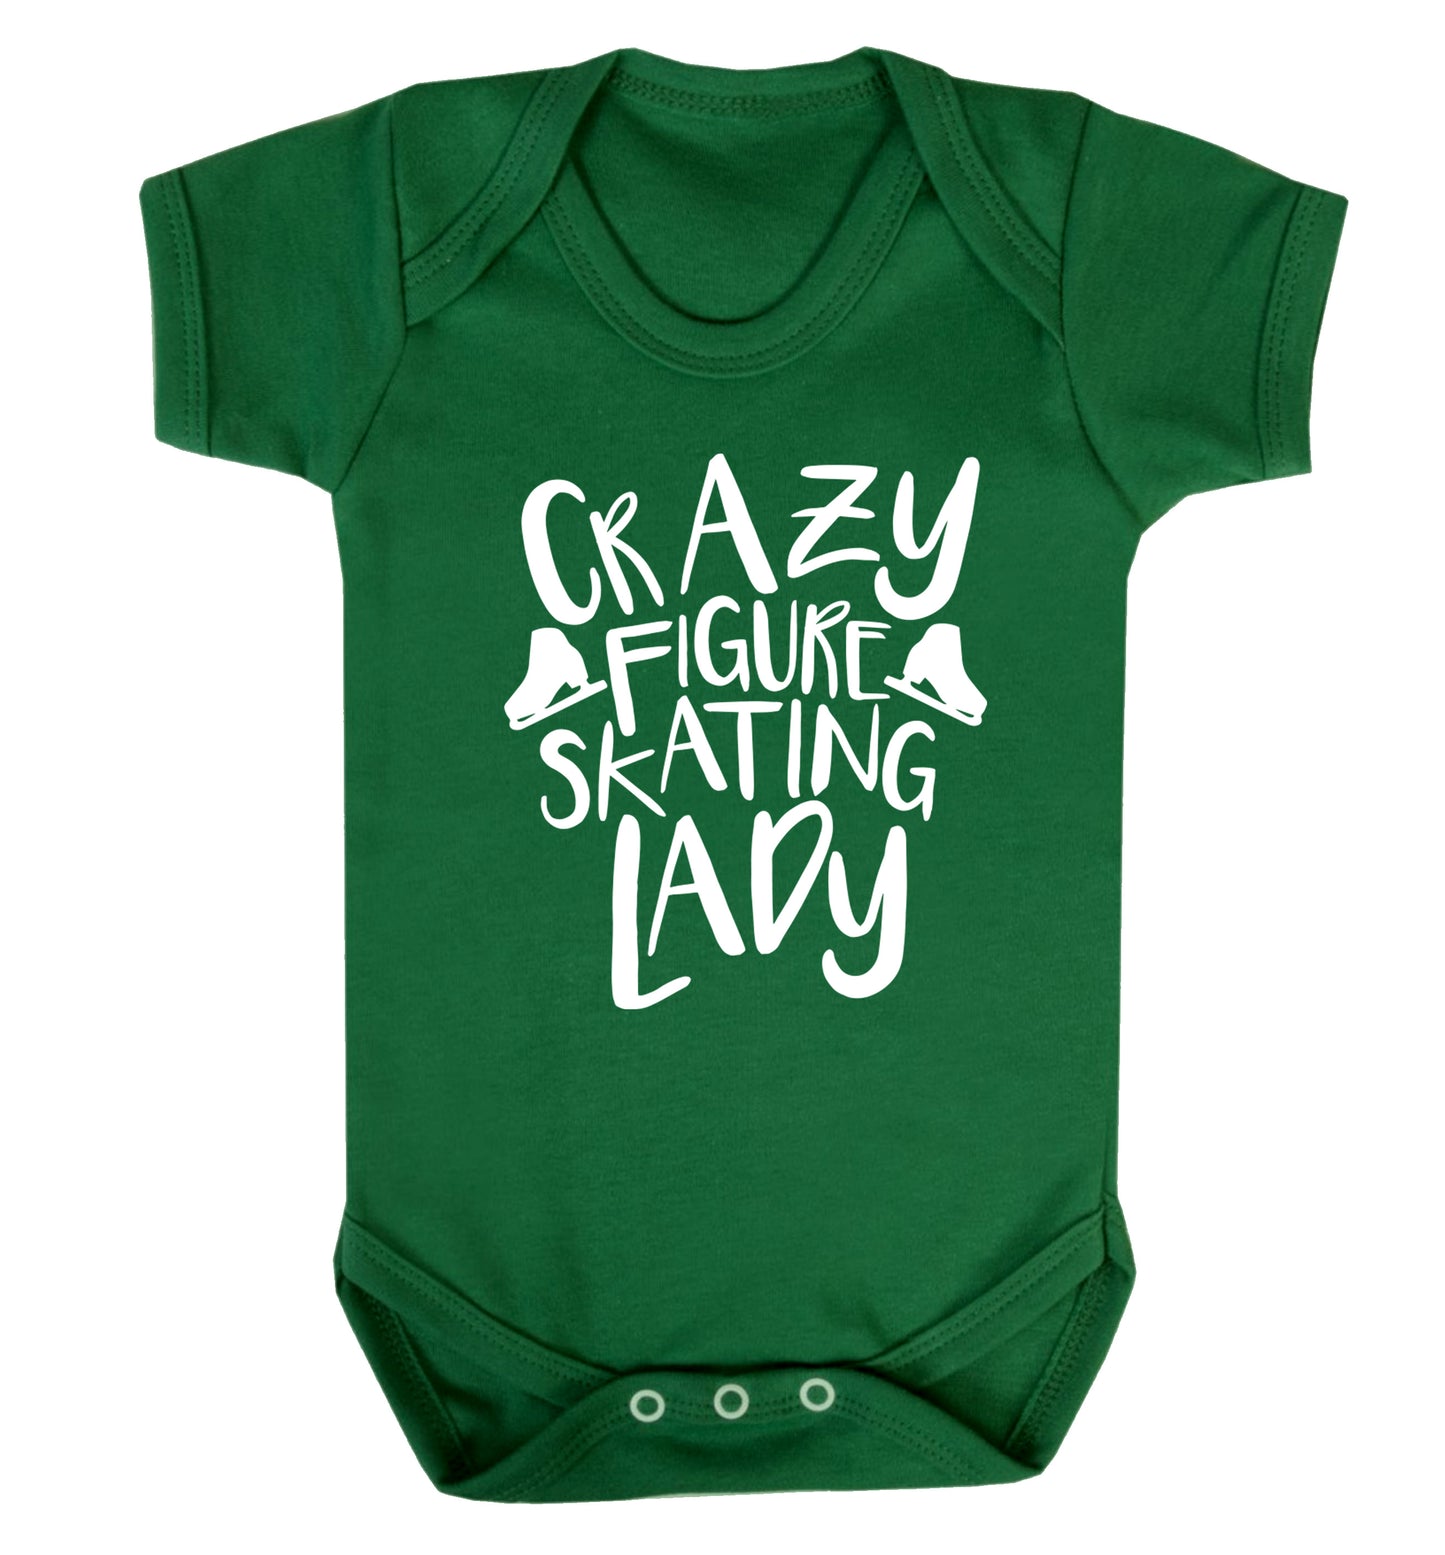 Crazy figure skating lady Baby Vest green 18-24 months